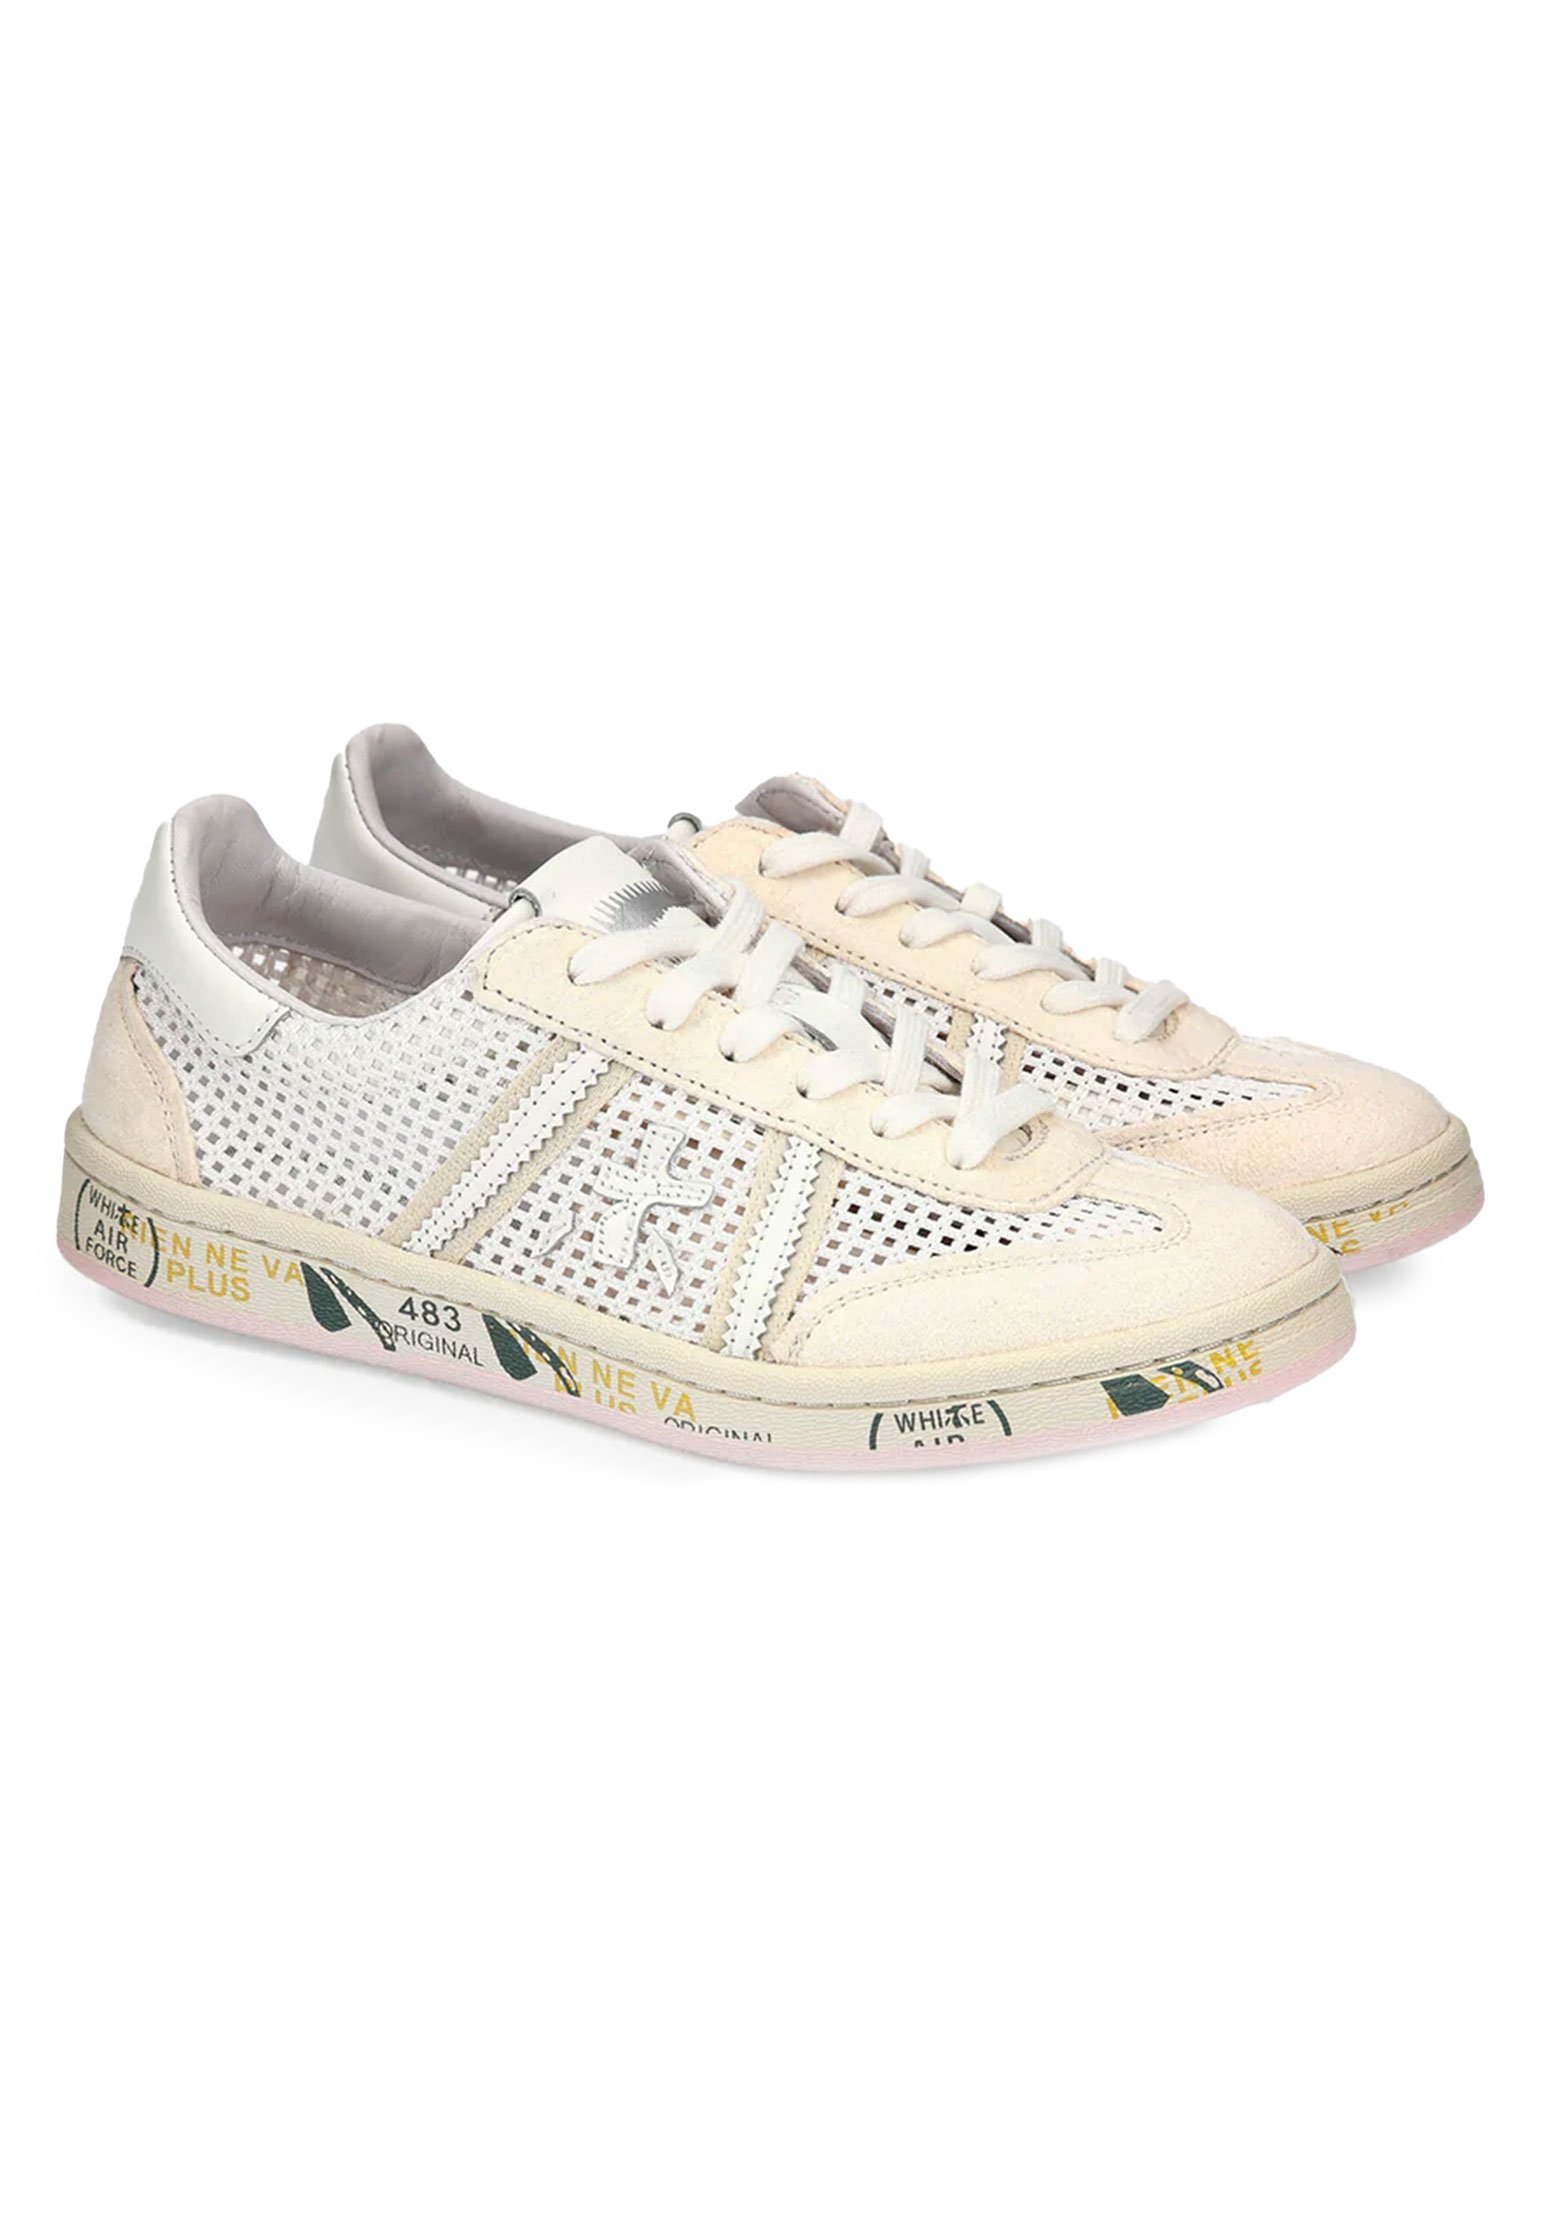 Sneakers PREMIATA Color: beige (Code: 4198) in online store Allure